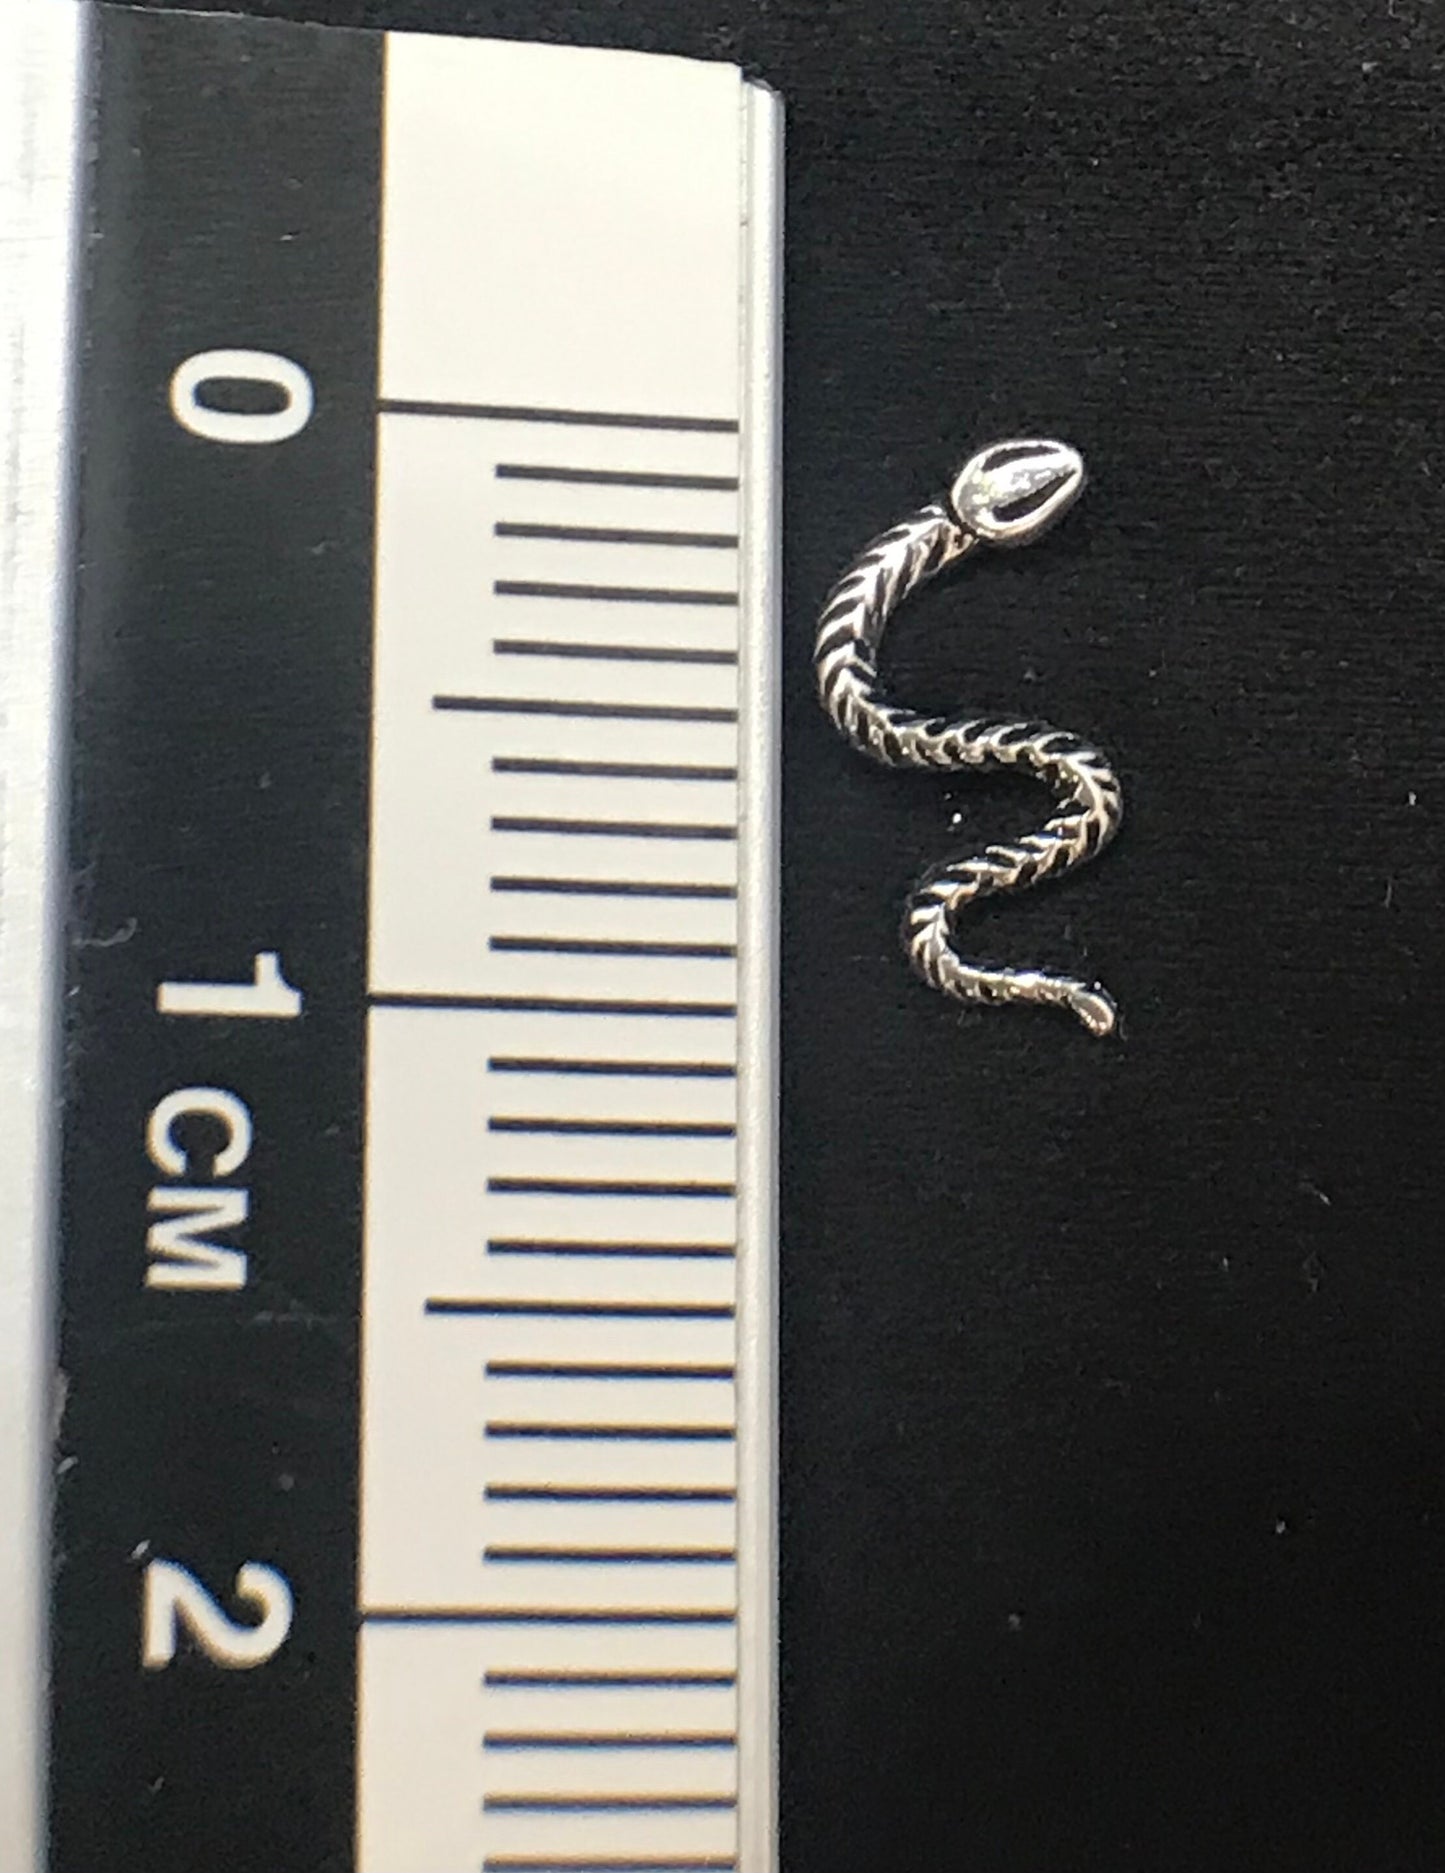 Thin snake earrings Sterling Silver 925 - TSE032